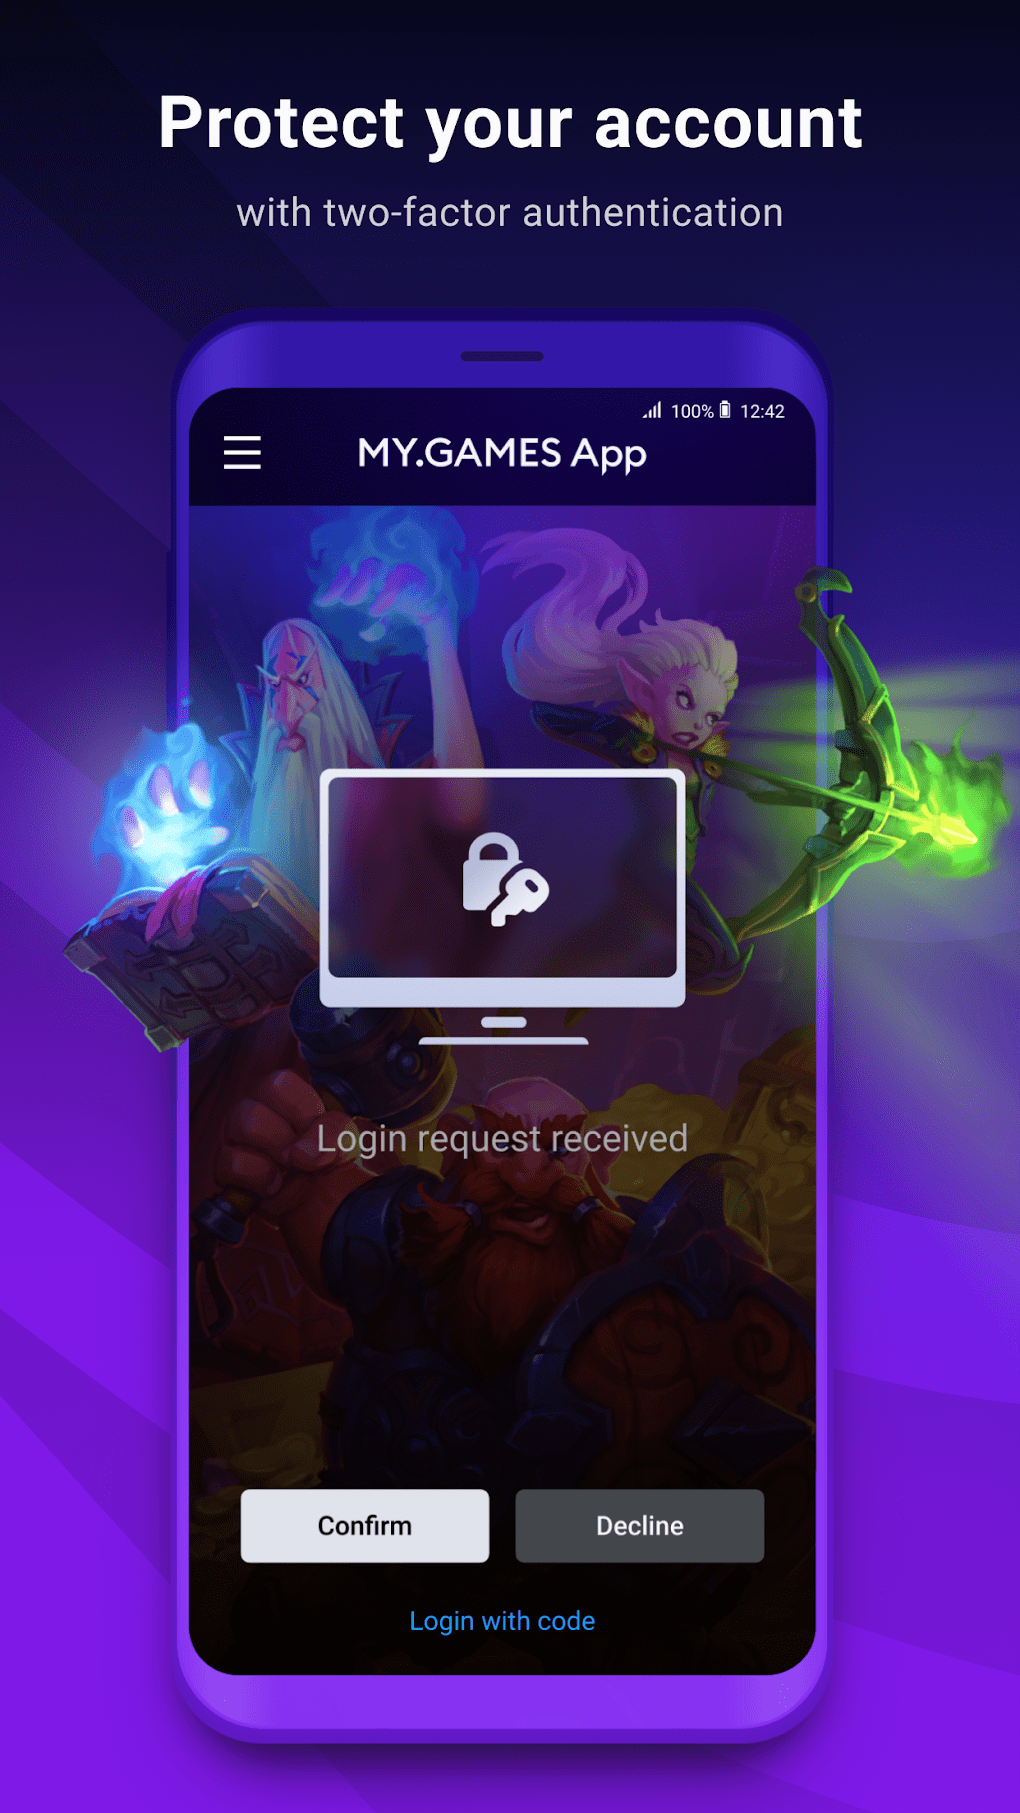 MyApp: aplicativo oficial para baixar jogos da Tencent Games - Mobile Gamer